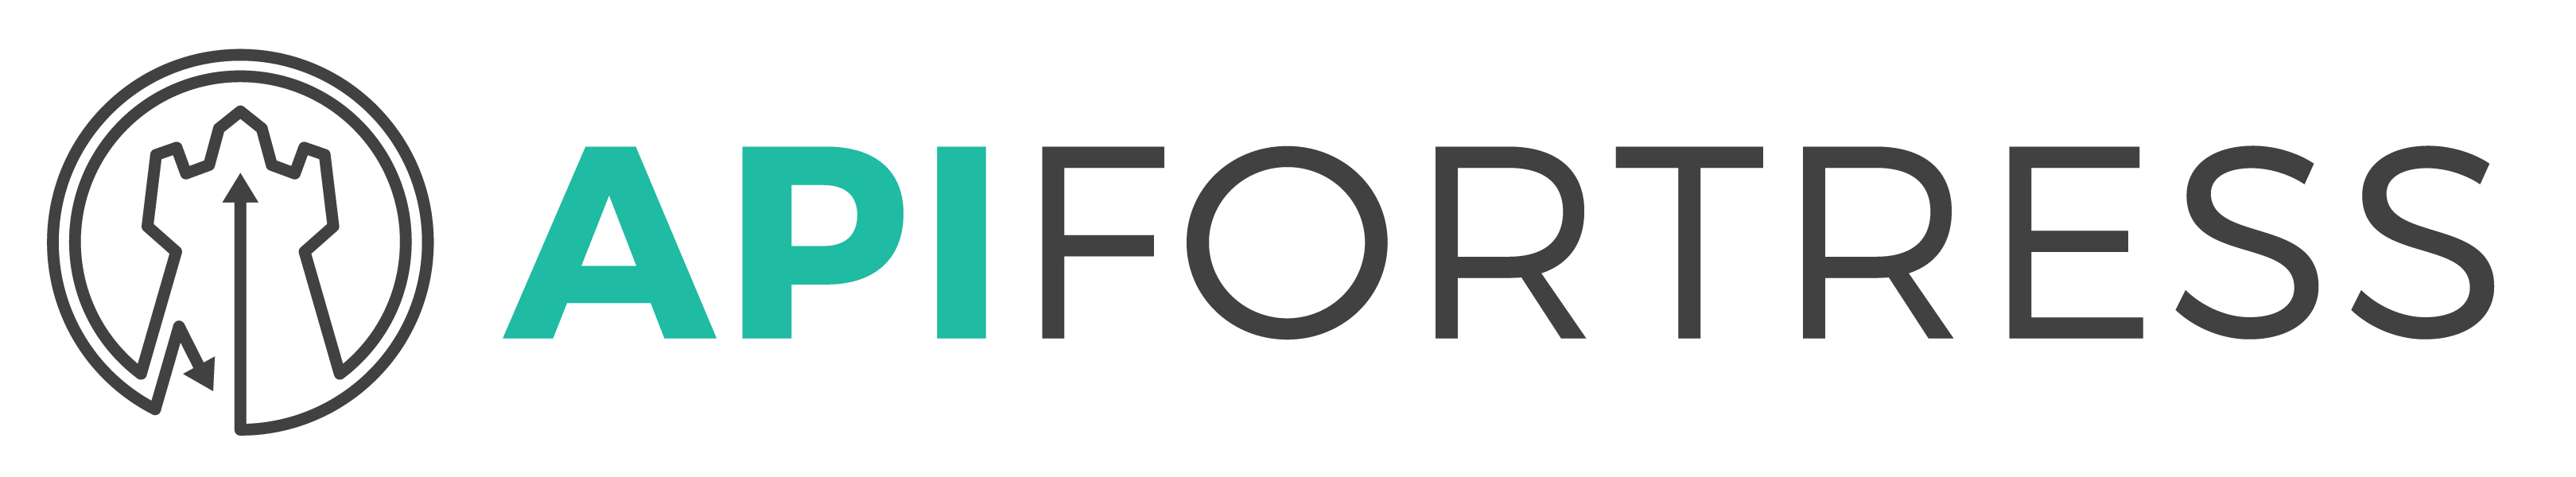 API-Fortress_Logo-2016_Rf-2